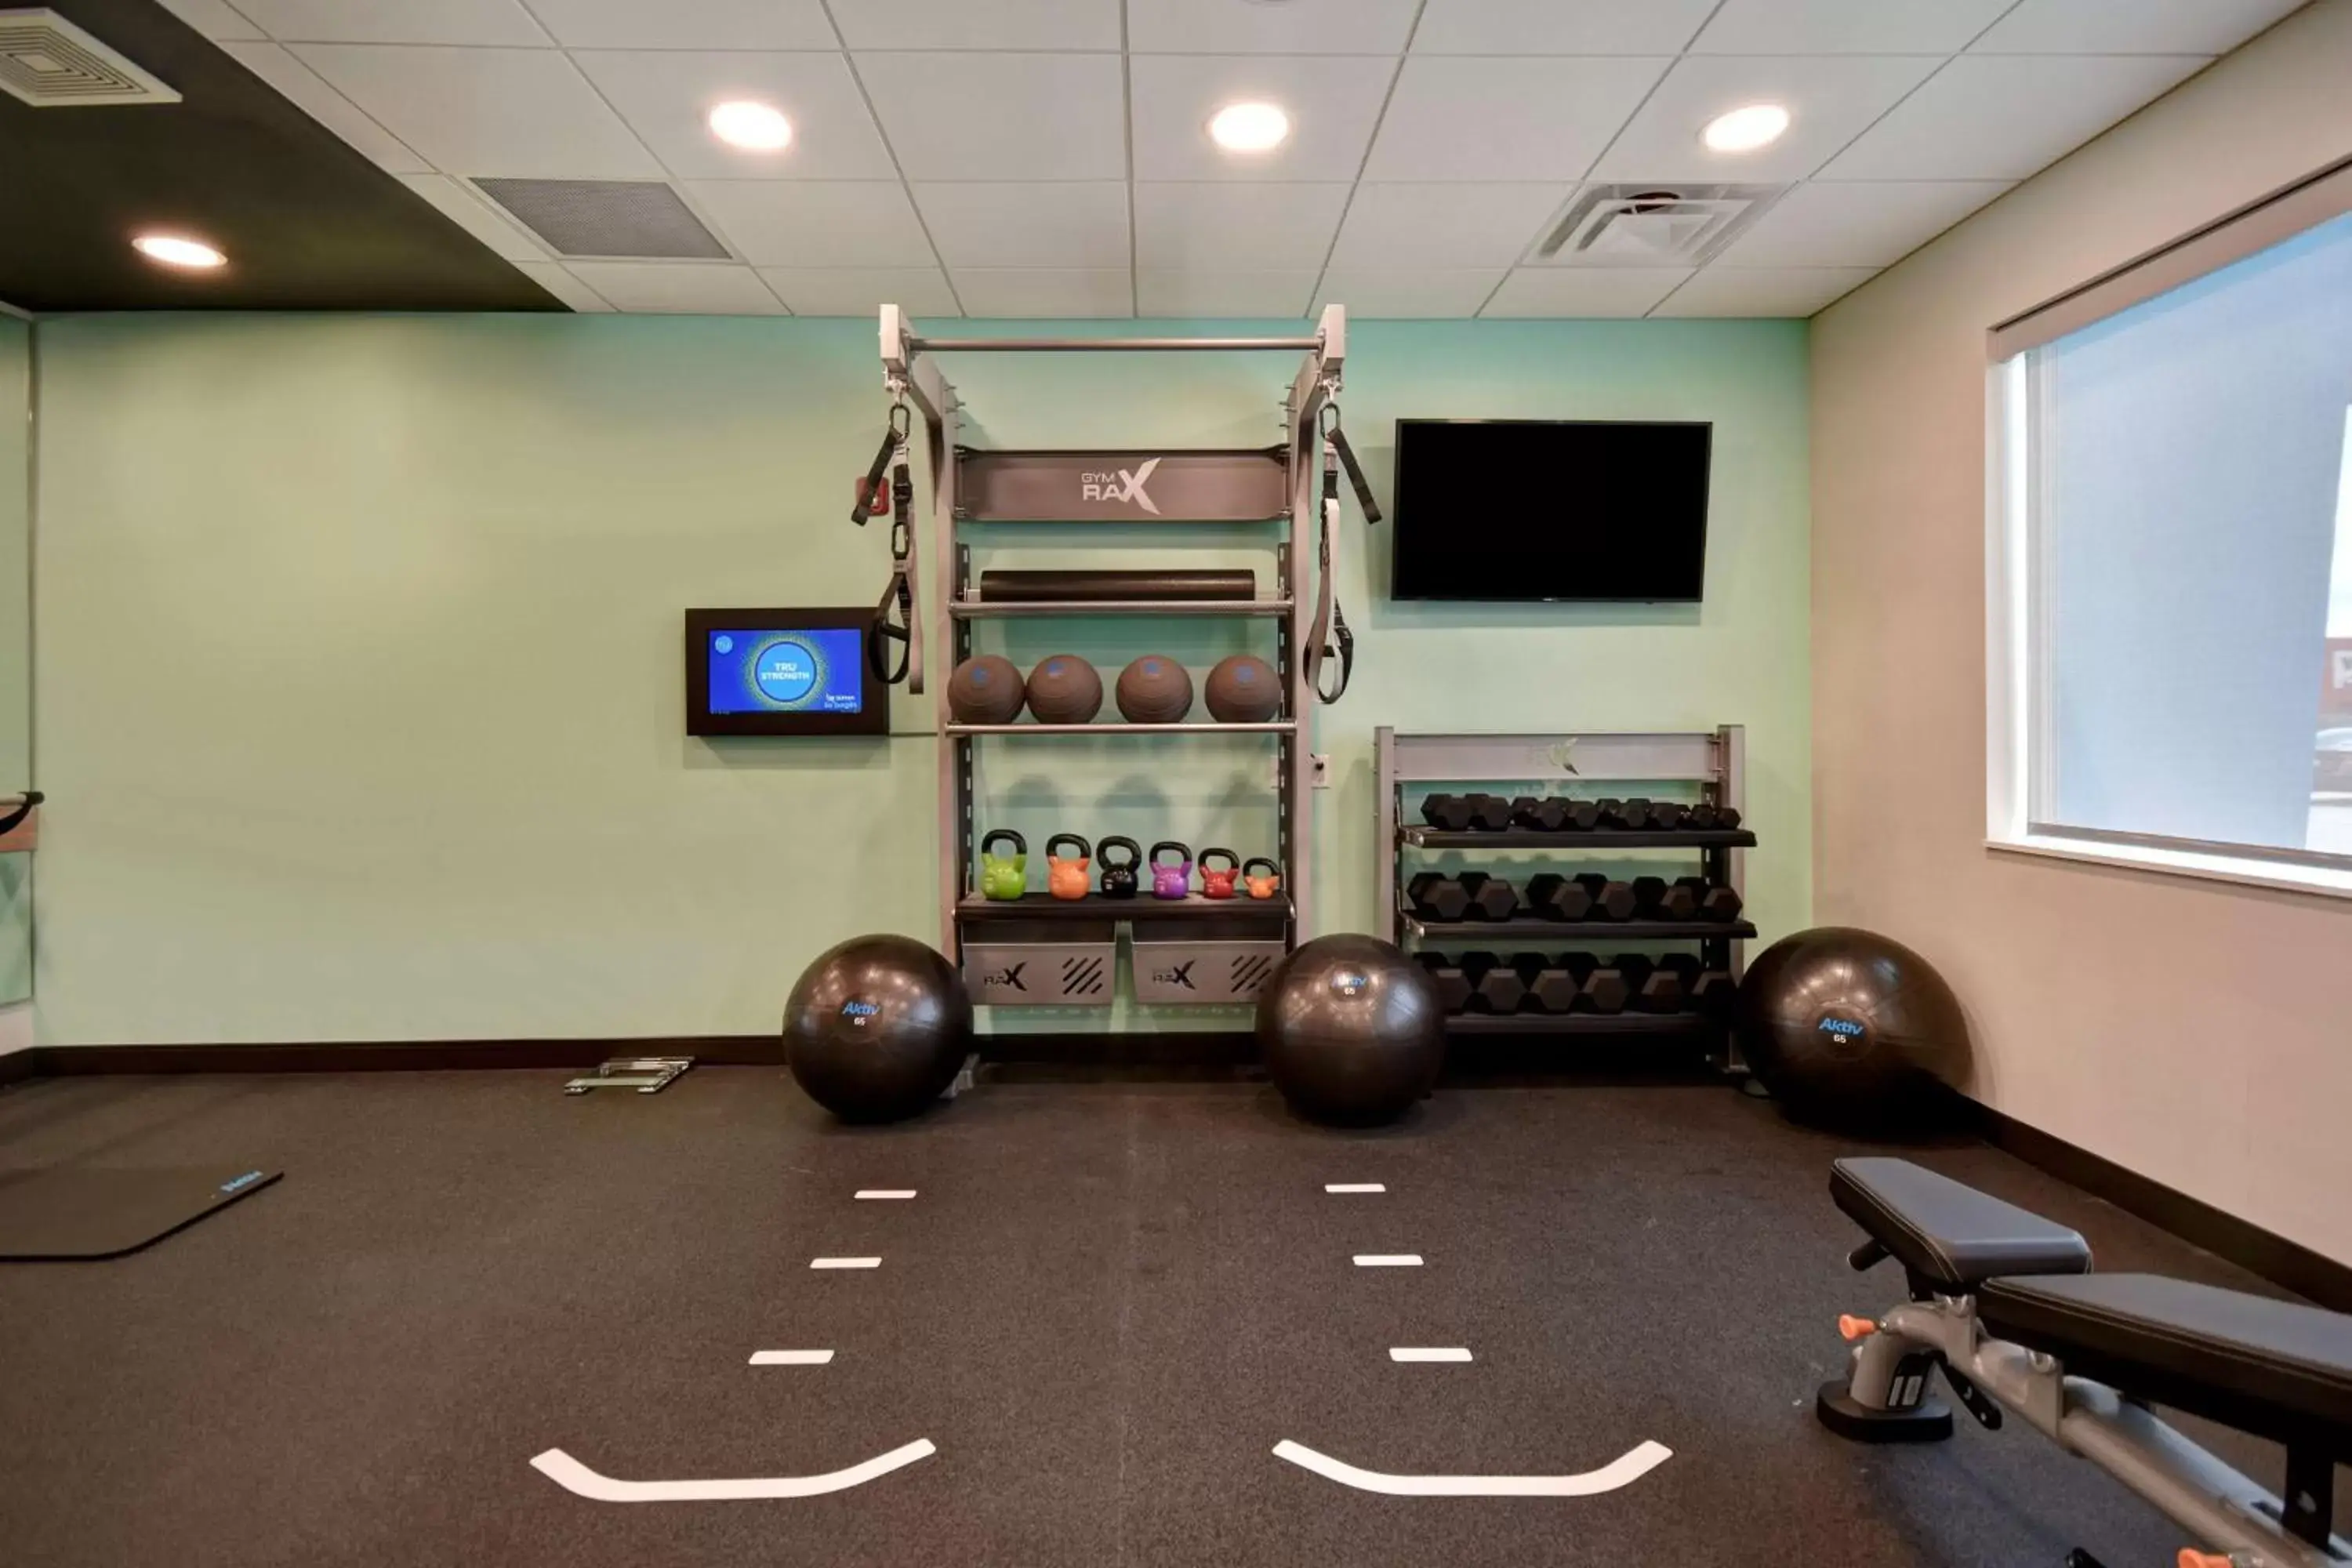 Fitness centre/facilities, Fitness Center/Facilities in Tru By Hilton Auburn, In